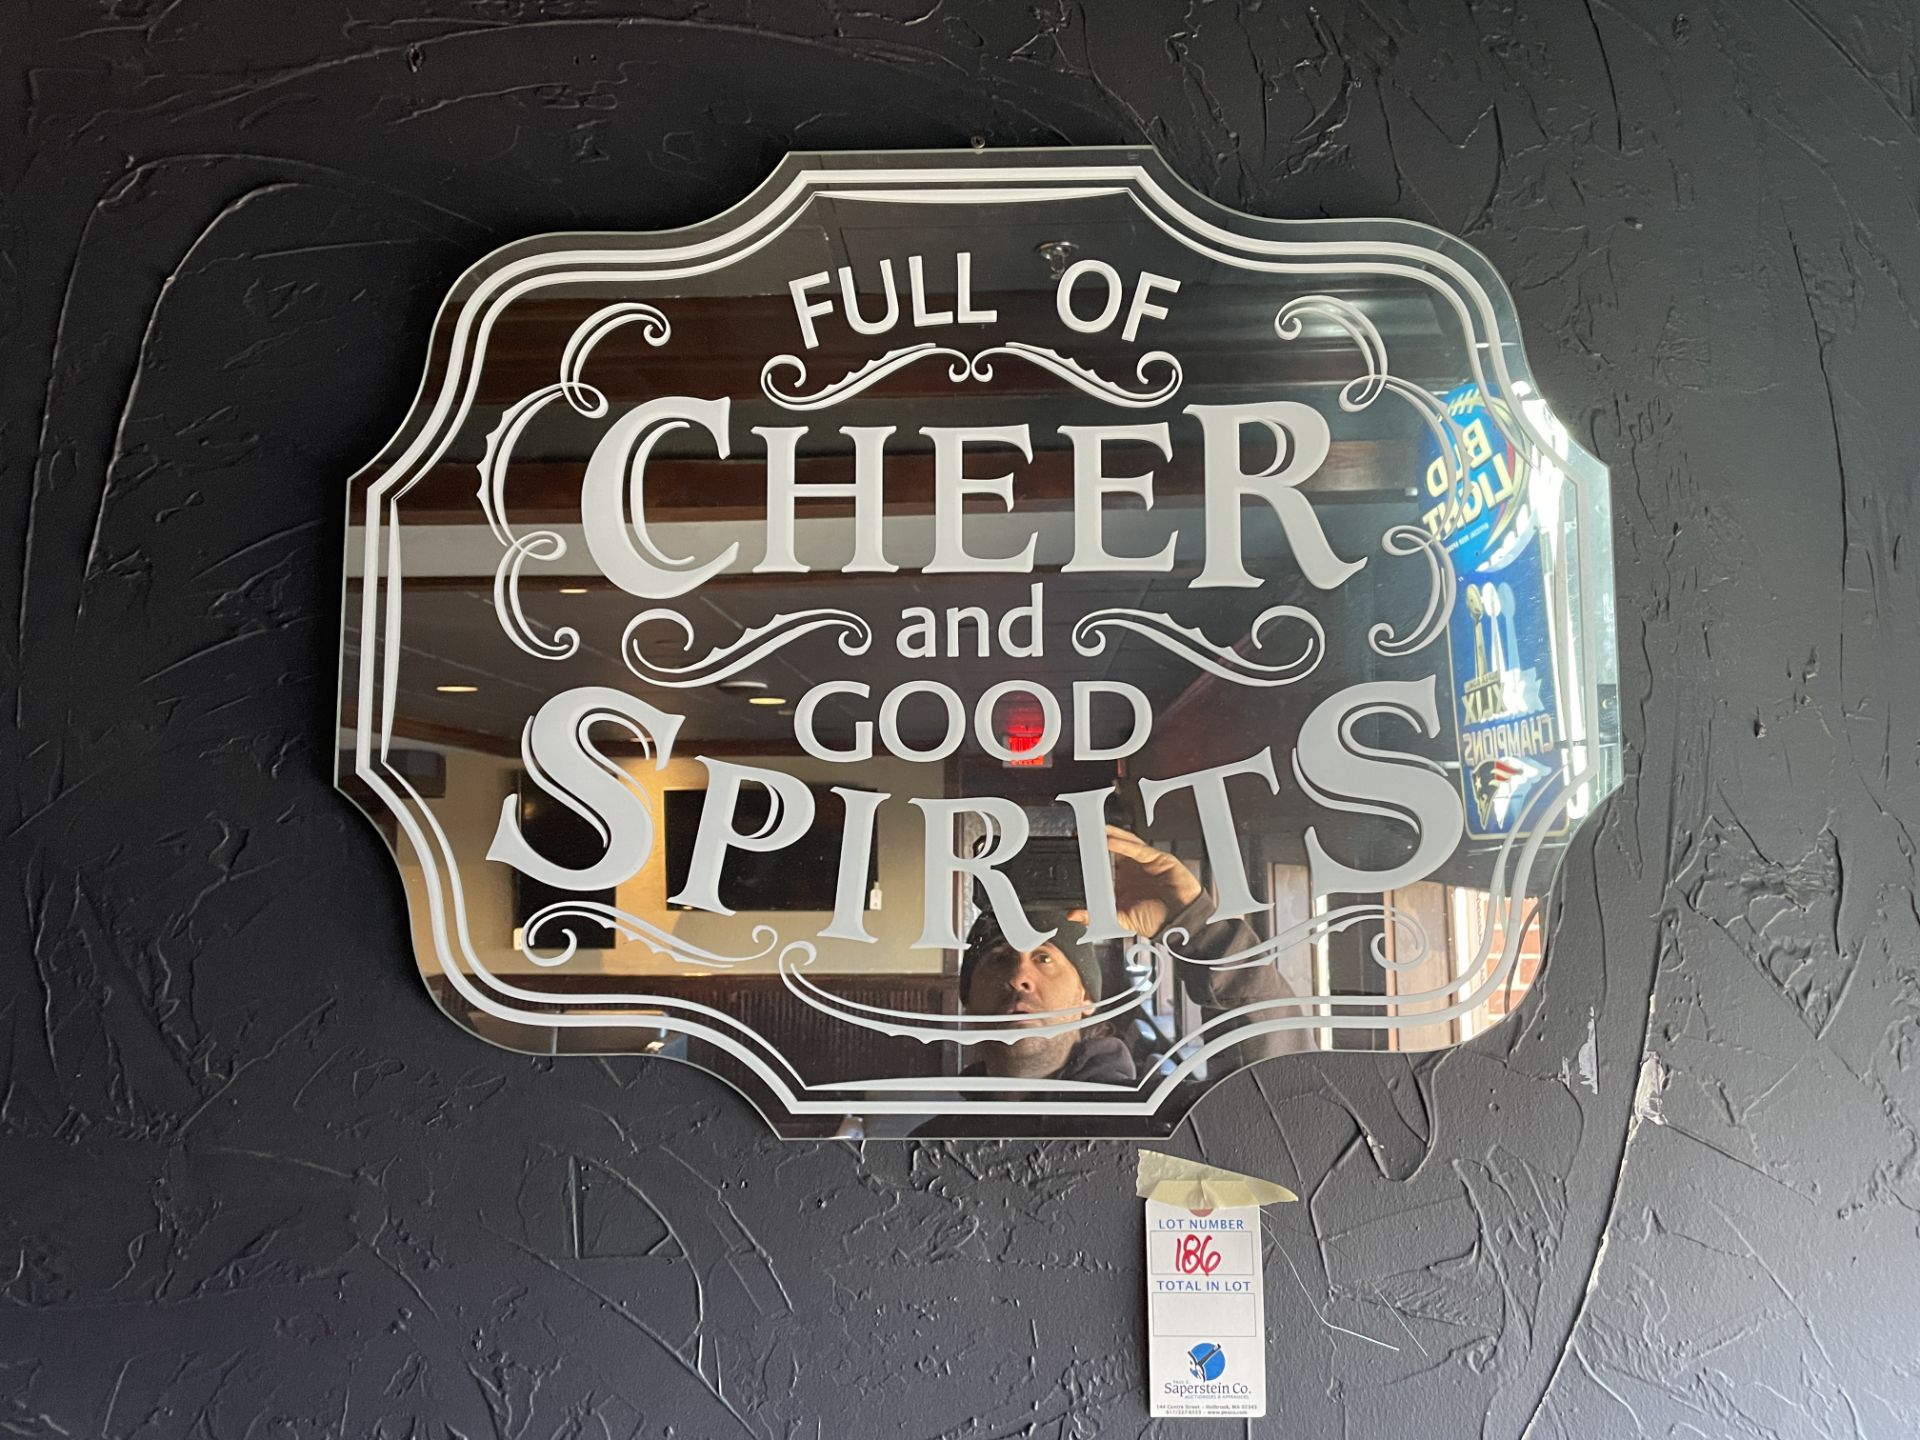 Mirror "Full of Cheer and Good Spirits"